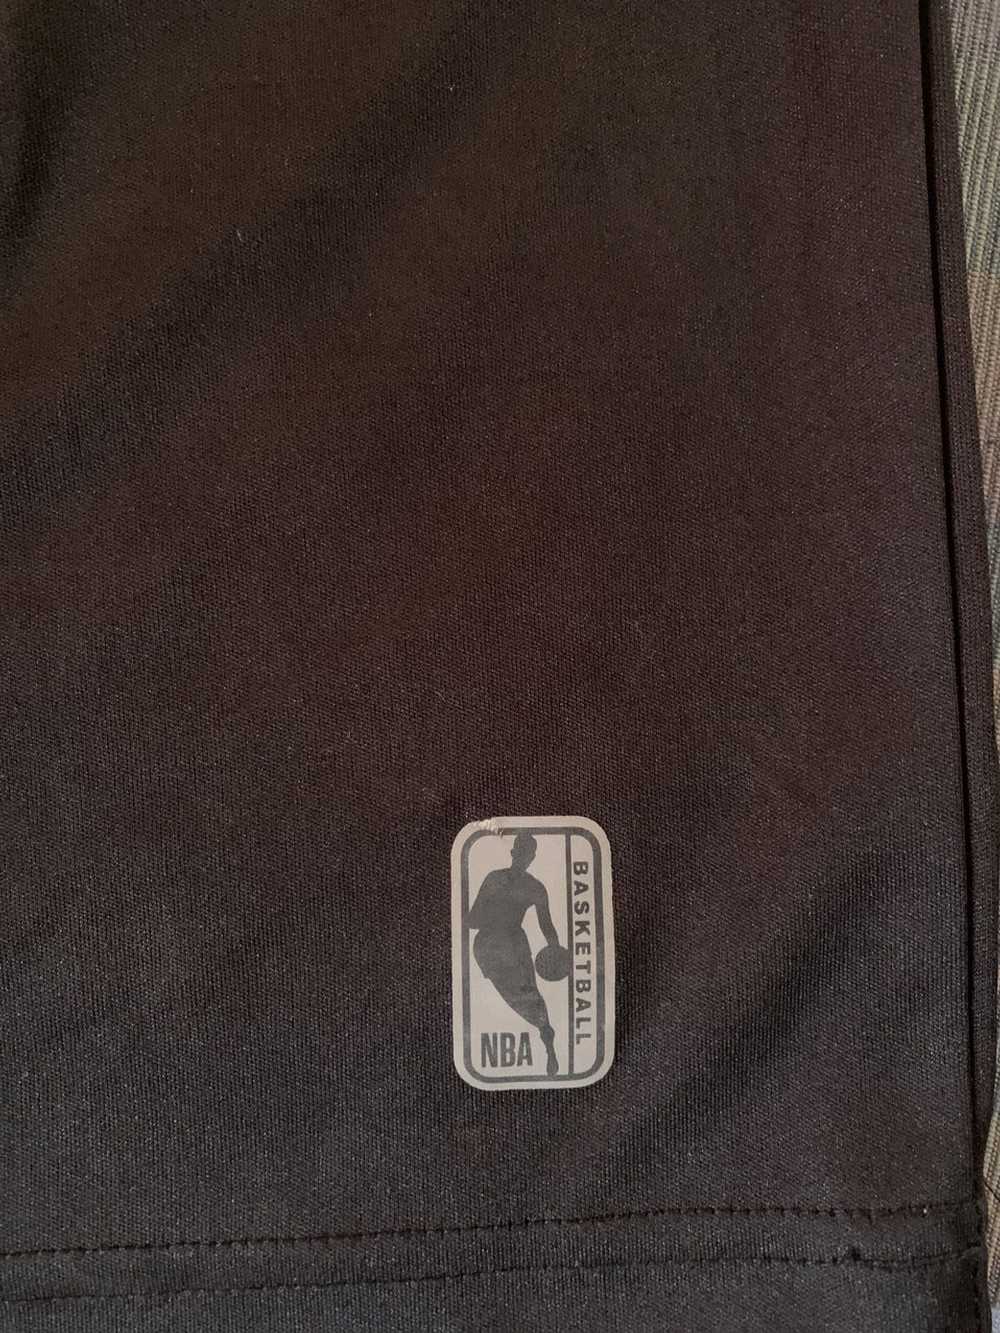 NBA NBA hoodie - image 3